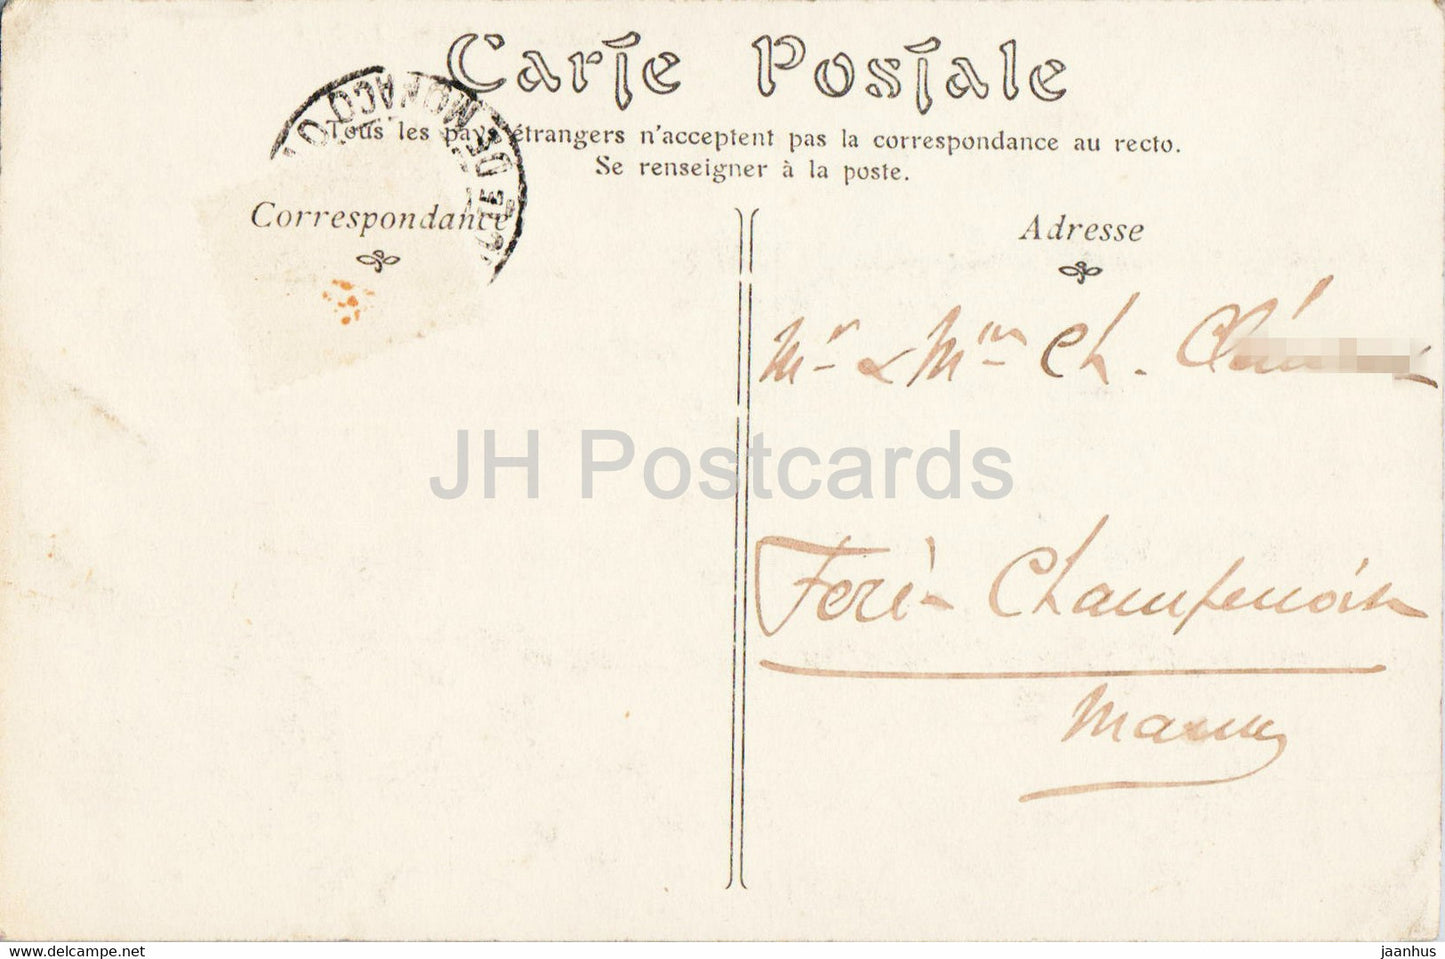 Monte Carlo - La Rampe et les Hotels - 838 - old postcard - Monaco - used